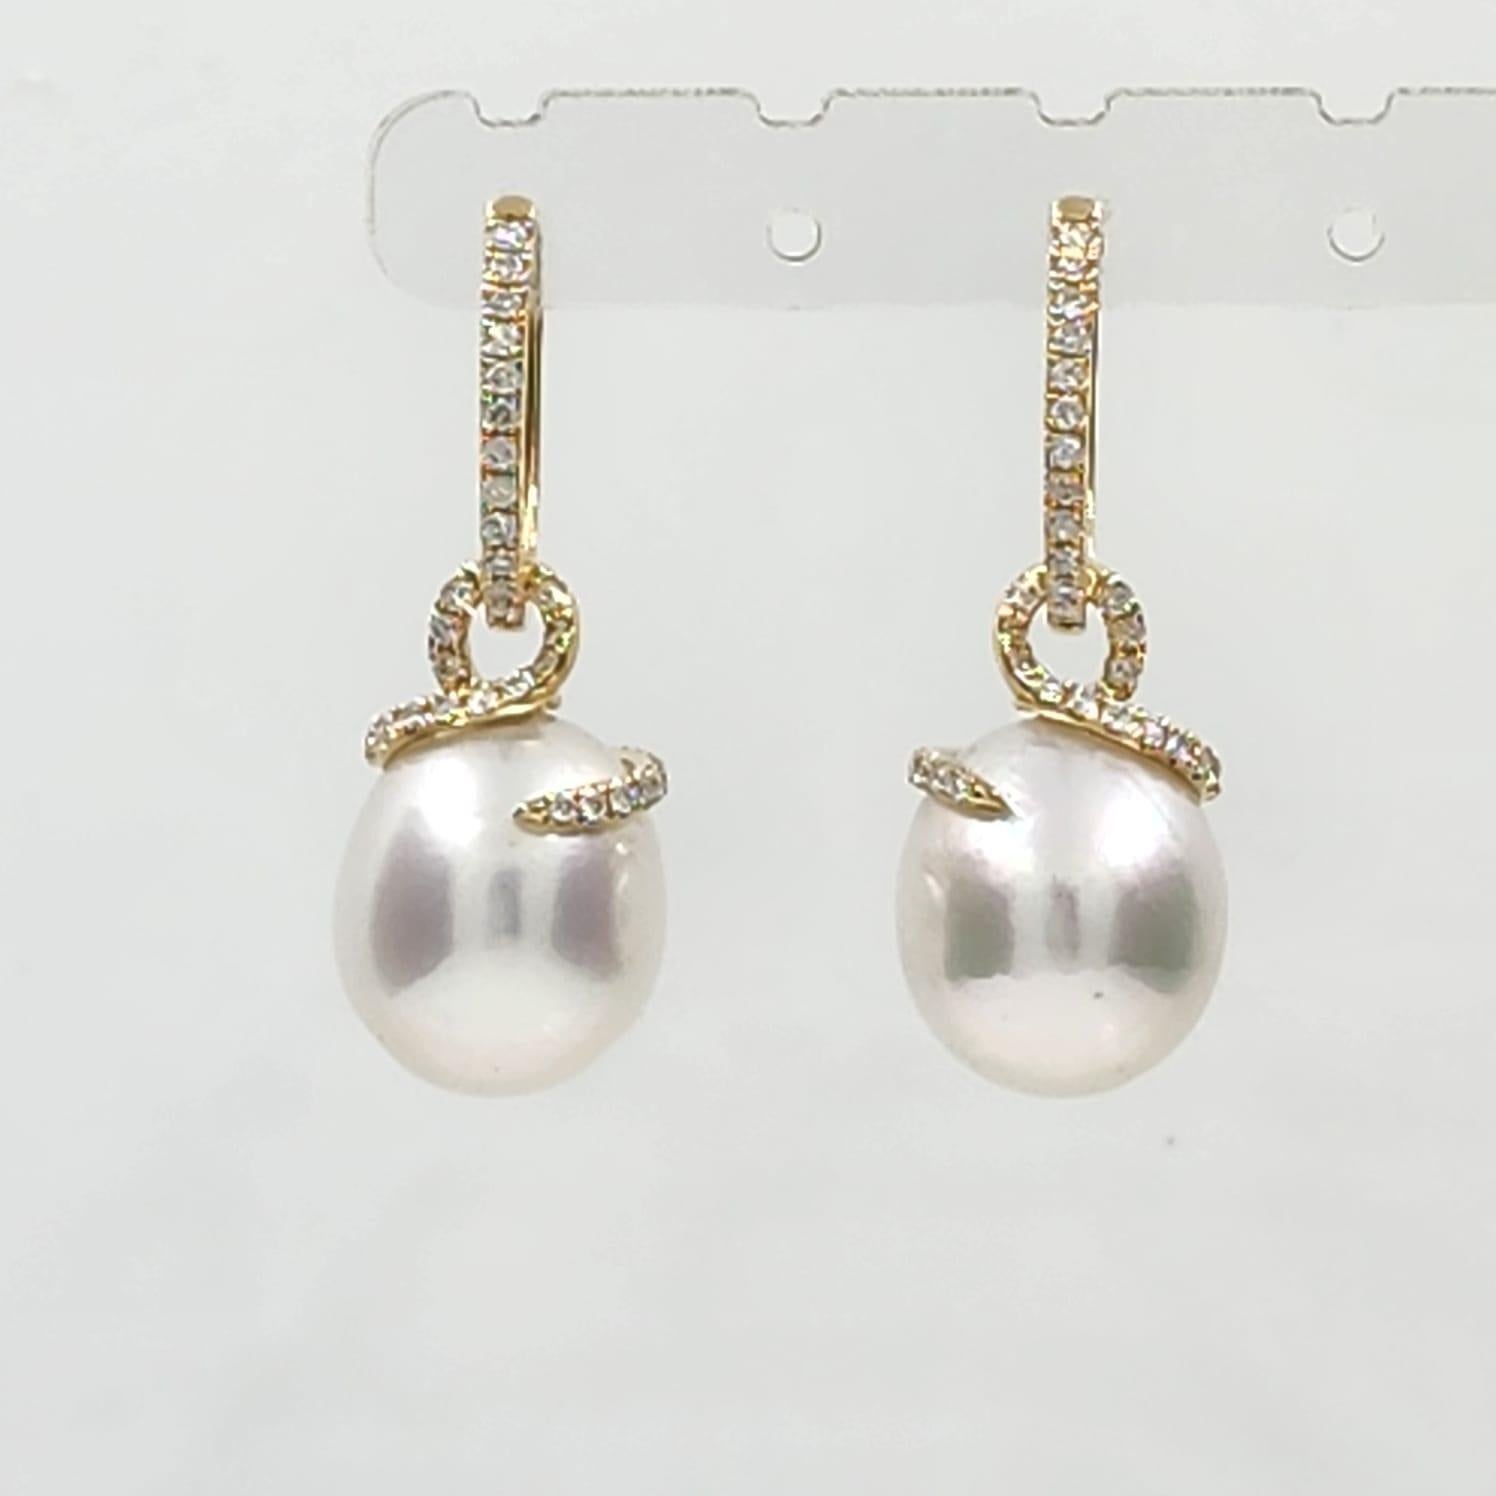 12x14mm Oval South Sea Pearl Diamond Dangle Earrings in 14 Karat Yellow Gold For Sale 2